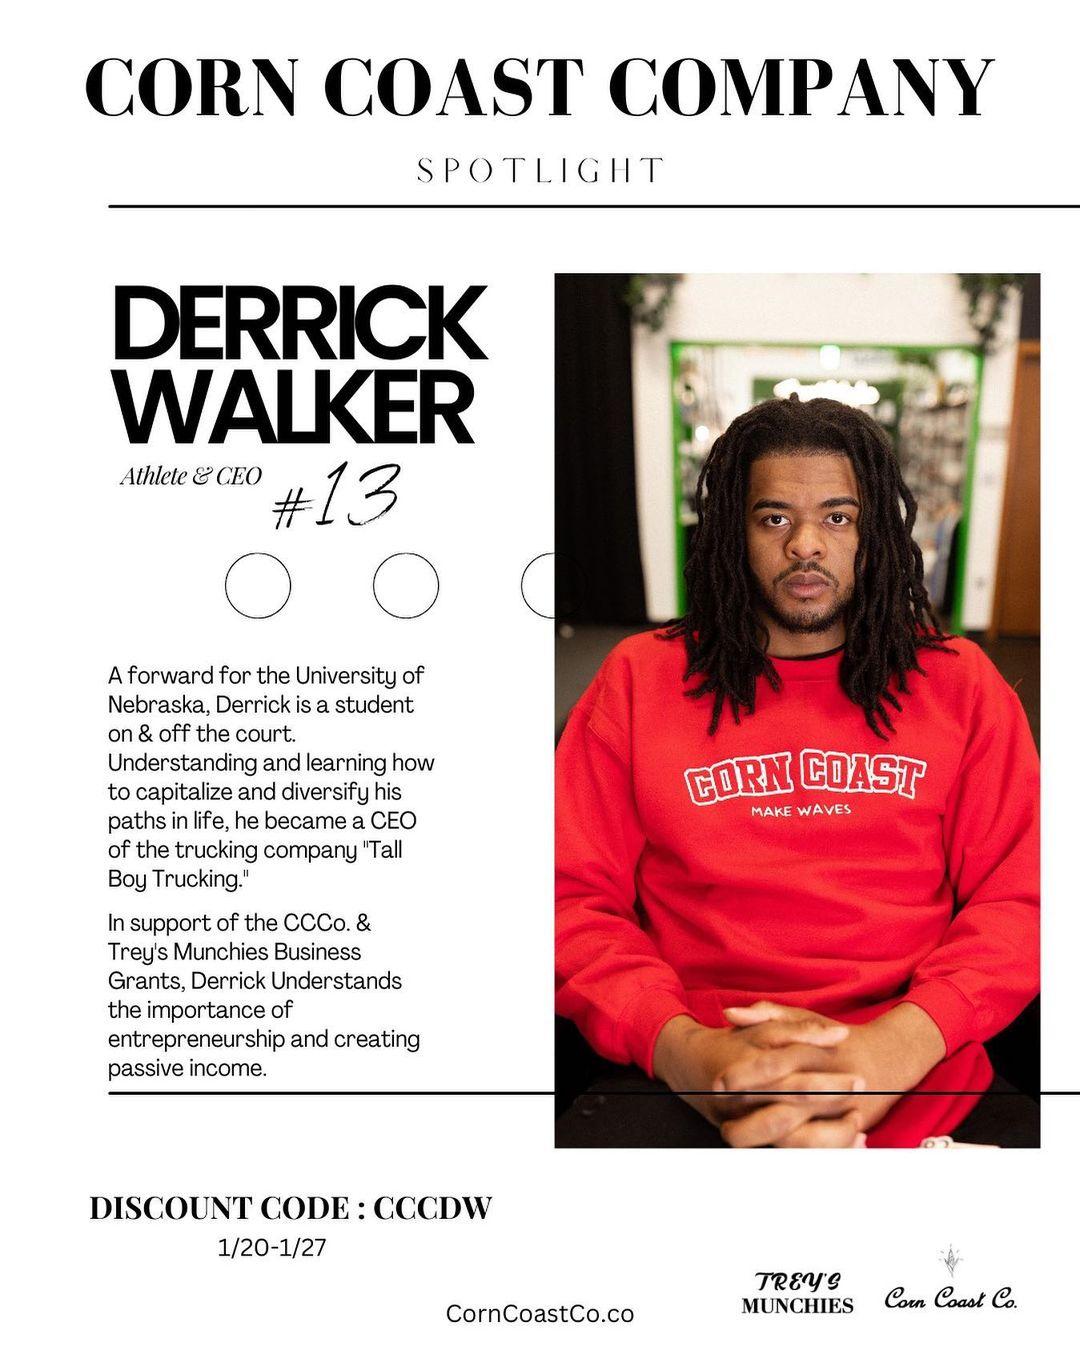 Derrick Walker Instagram Post Influencer Campaign